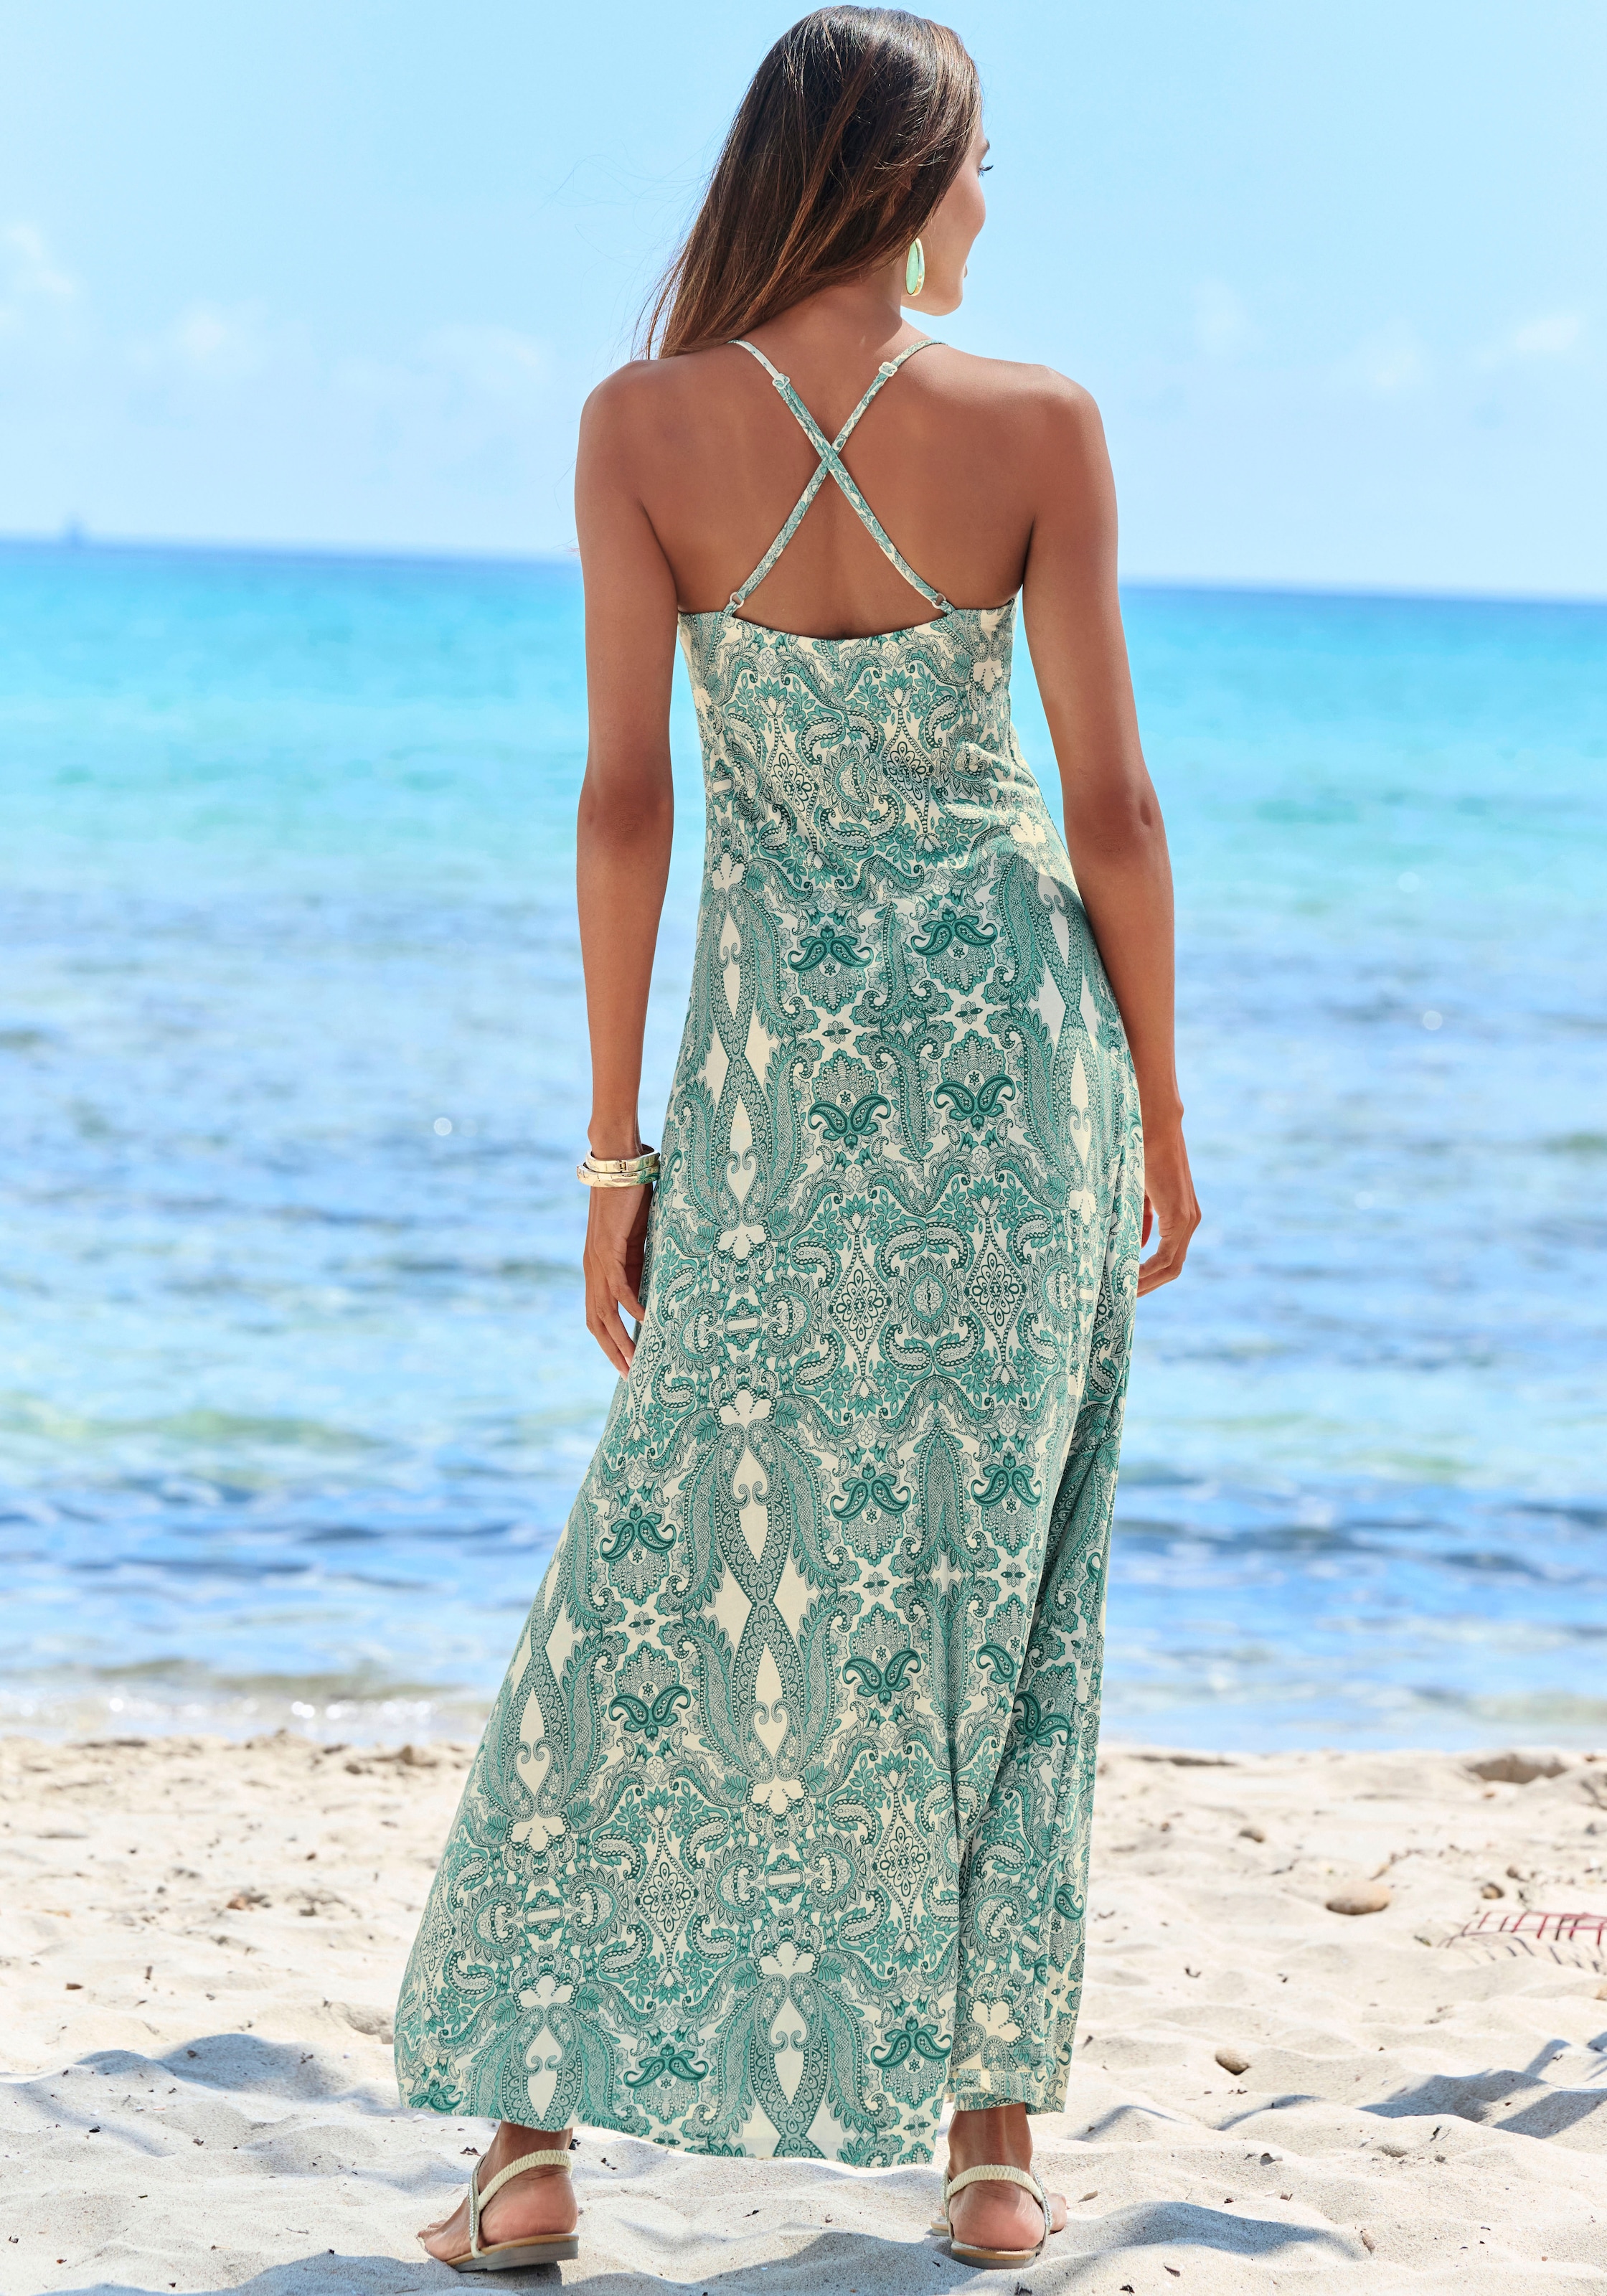 LASCANA Maxikleid, mit Alloverdruck, Sommerkleid in lockerer Passform, Strandkleid